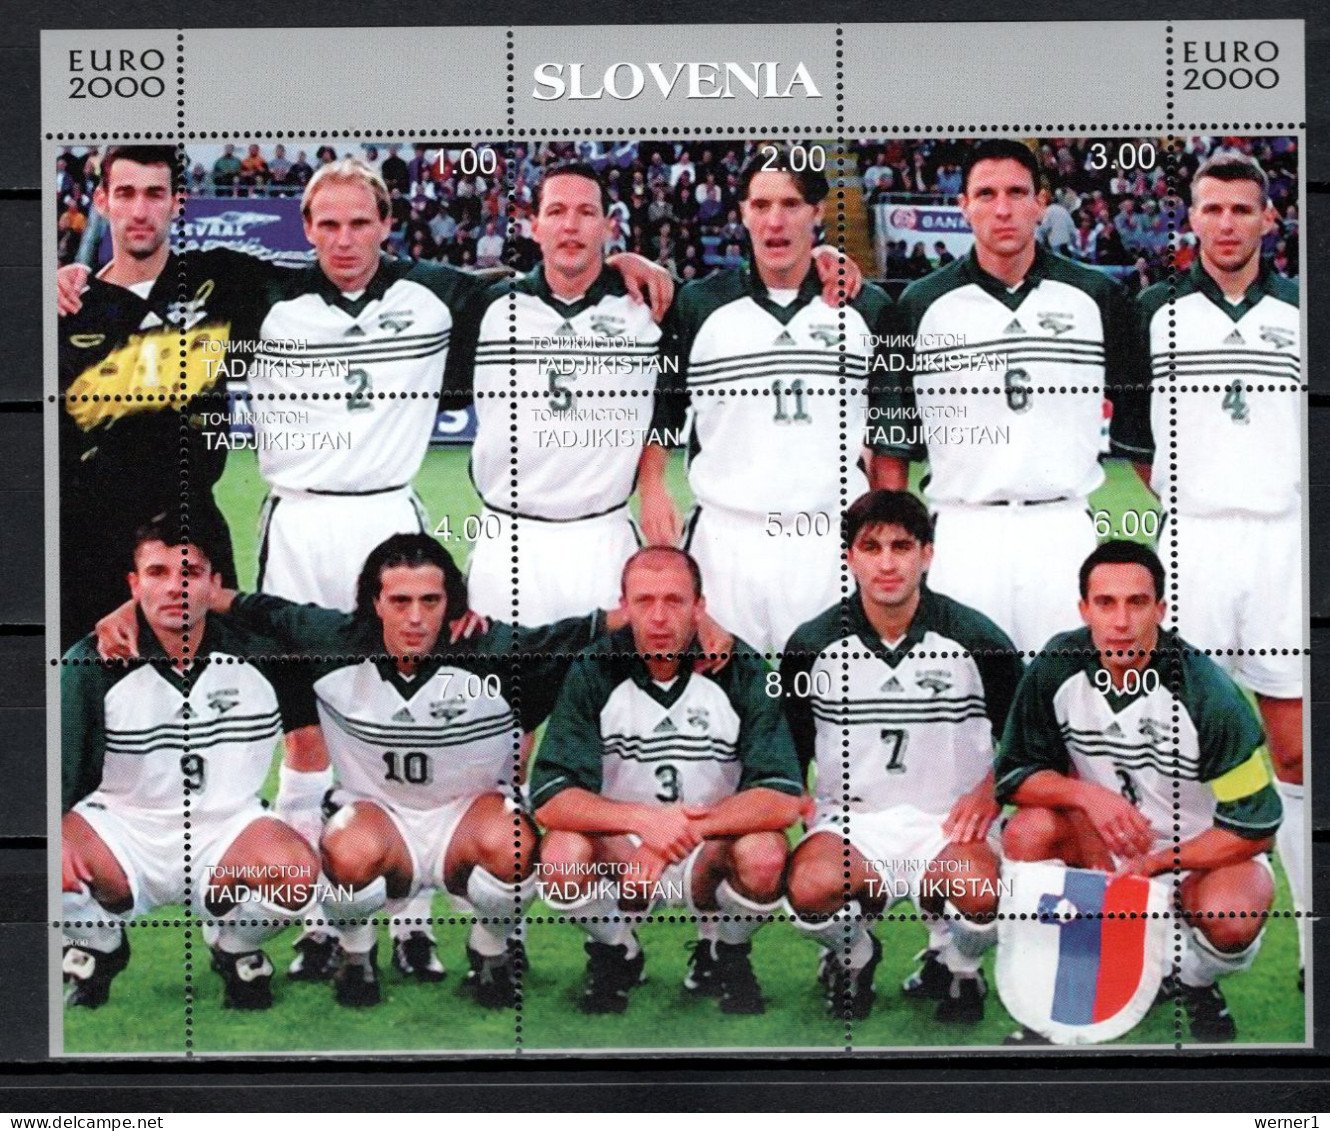 Tadzikistan 2000 Football Soccer European Championship, Sheetlet With Slovenia Team MNH - UEFA European Championship